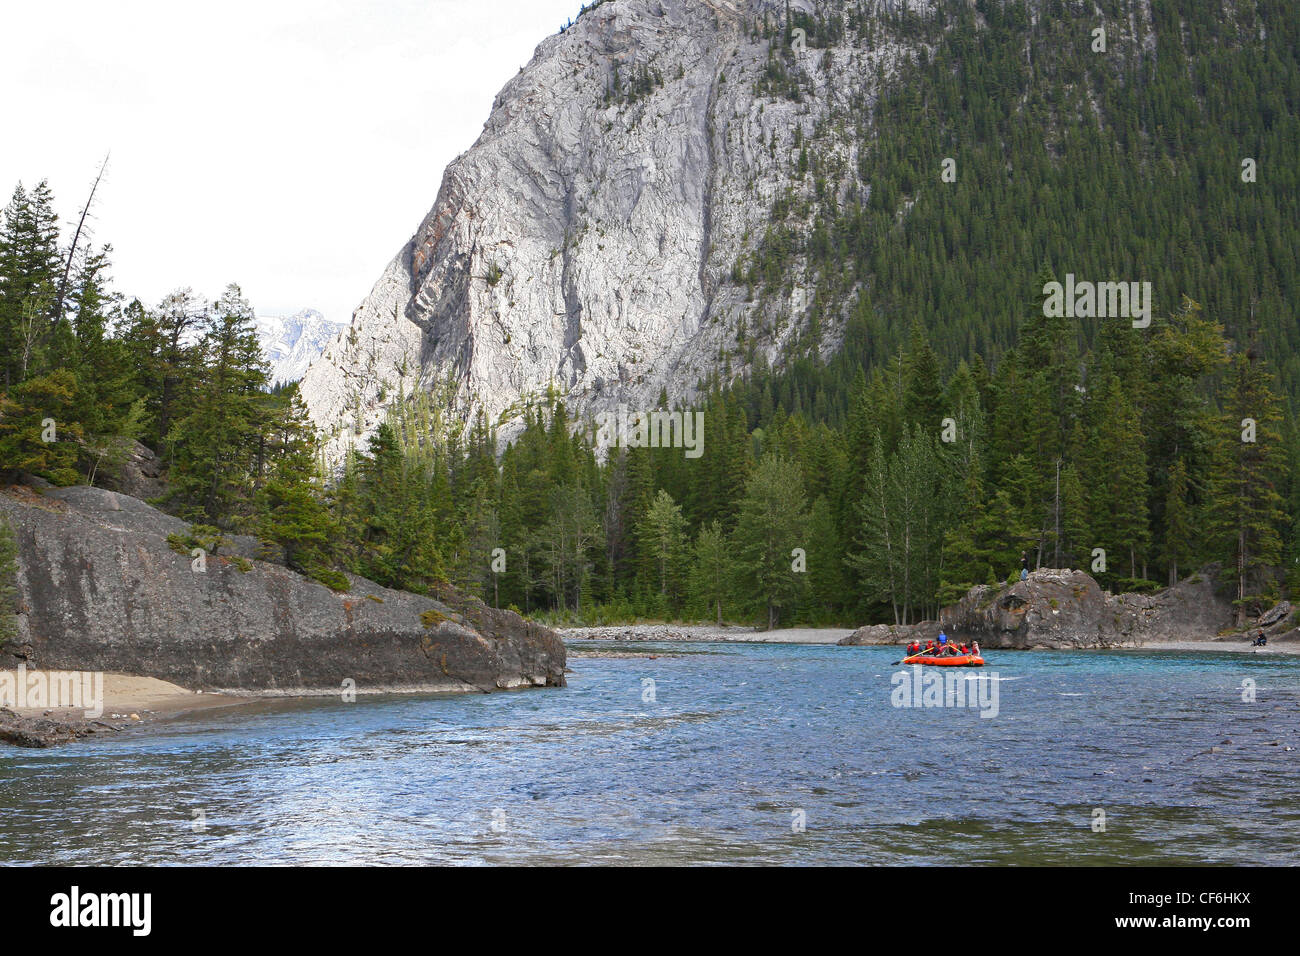 Boating on the Yukon river, Yukon, Canada Stock Photo